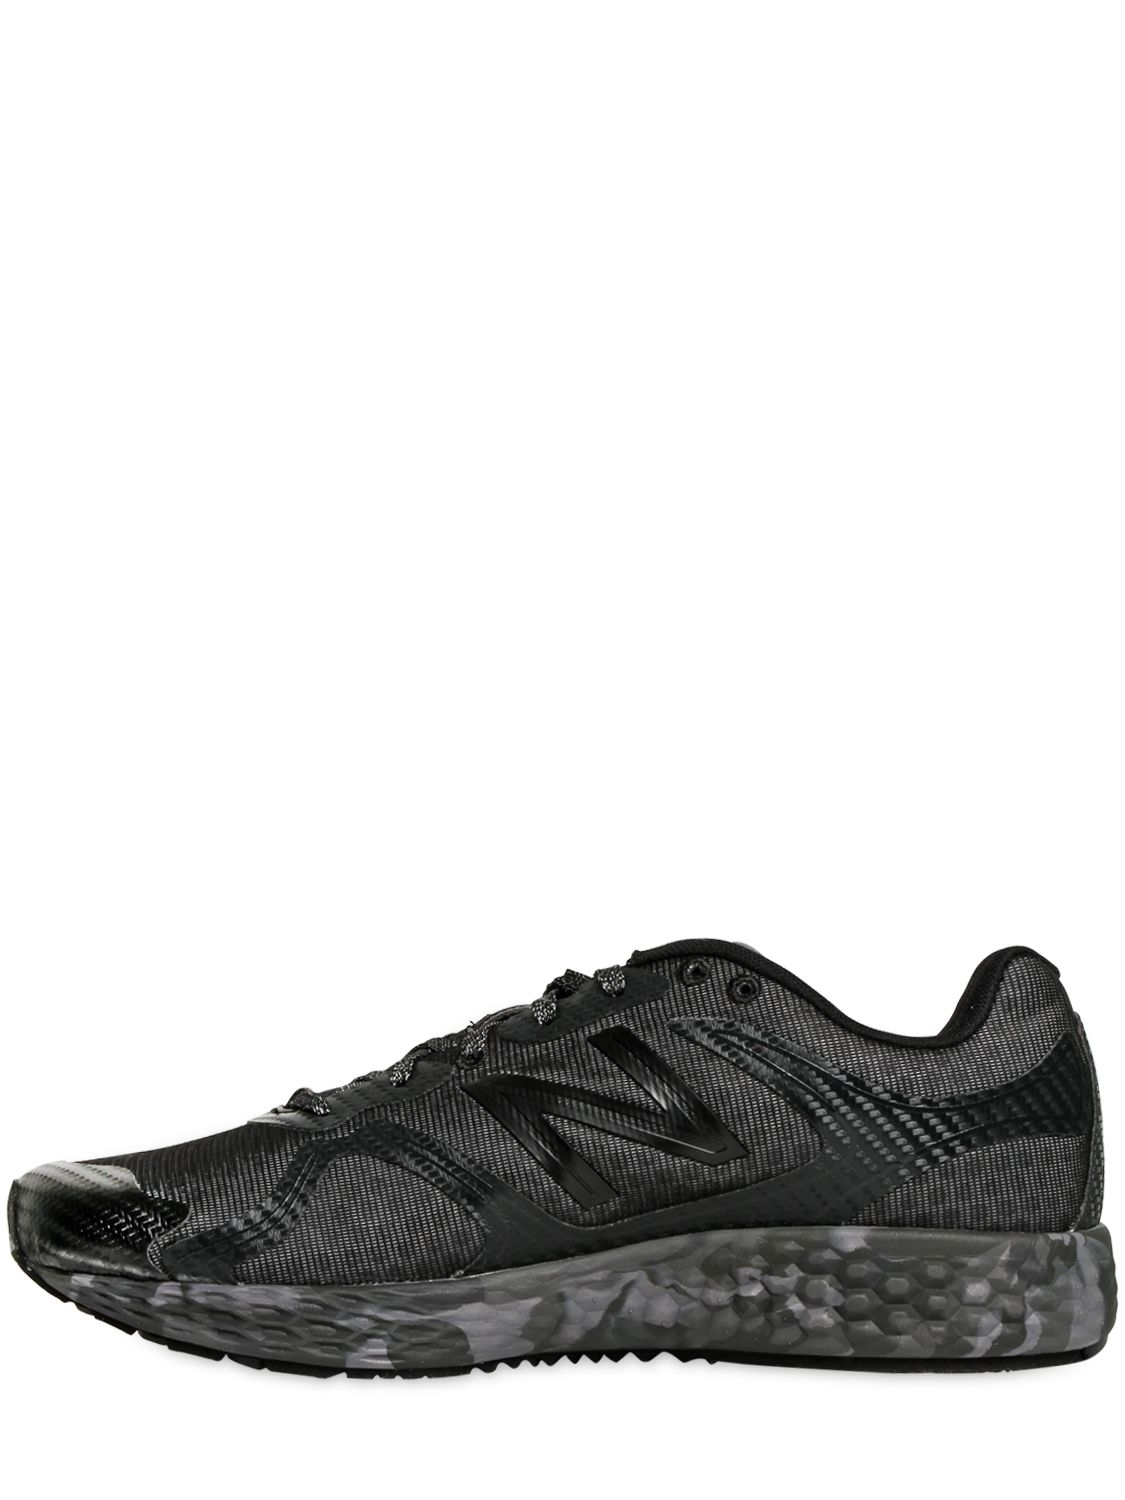 New Balance M980 Fresh Foam Running Sneakers in Black for Men - Lyst